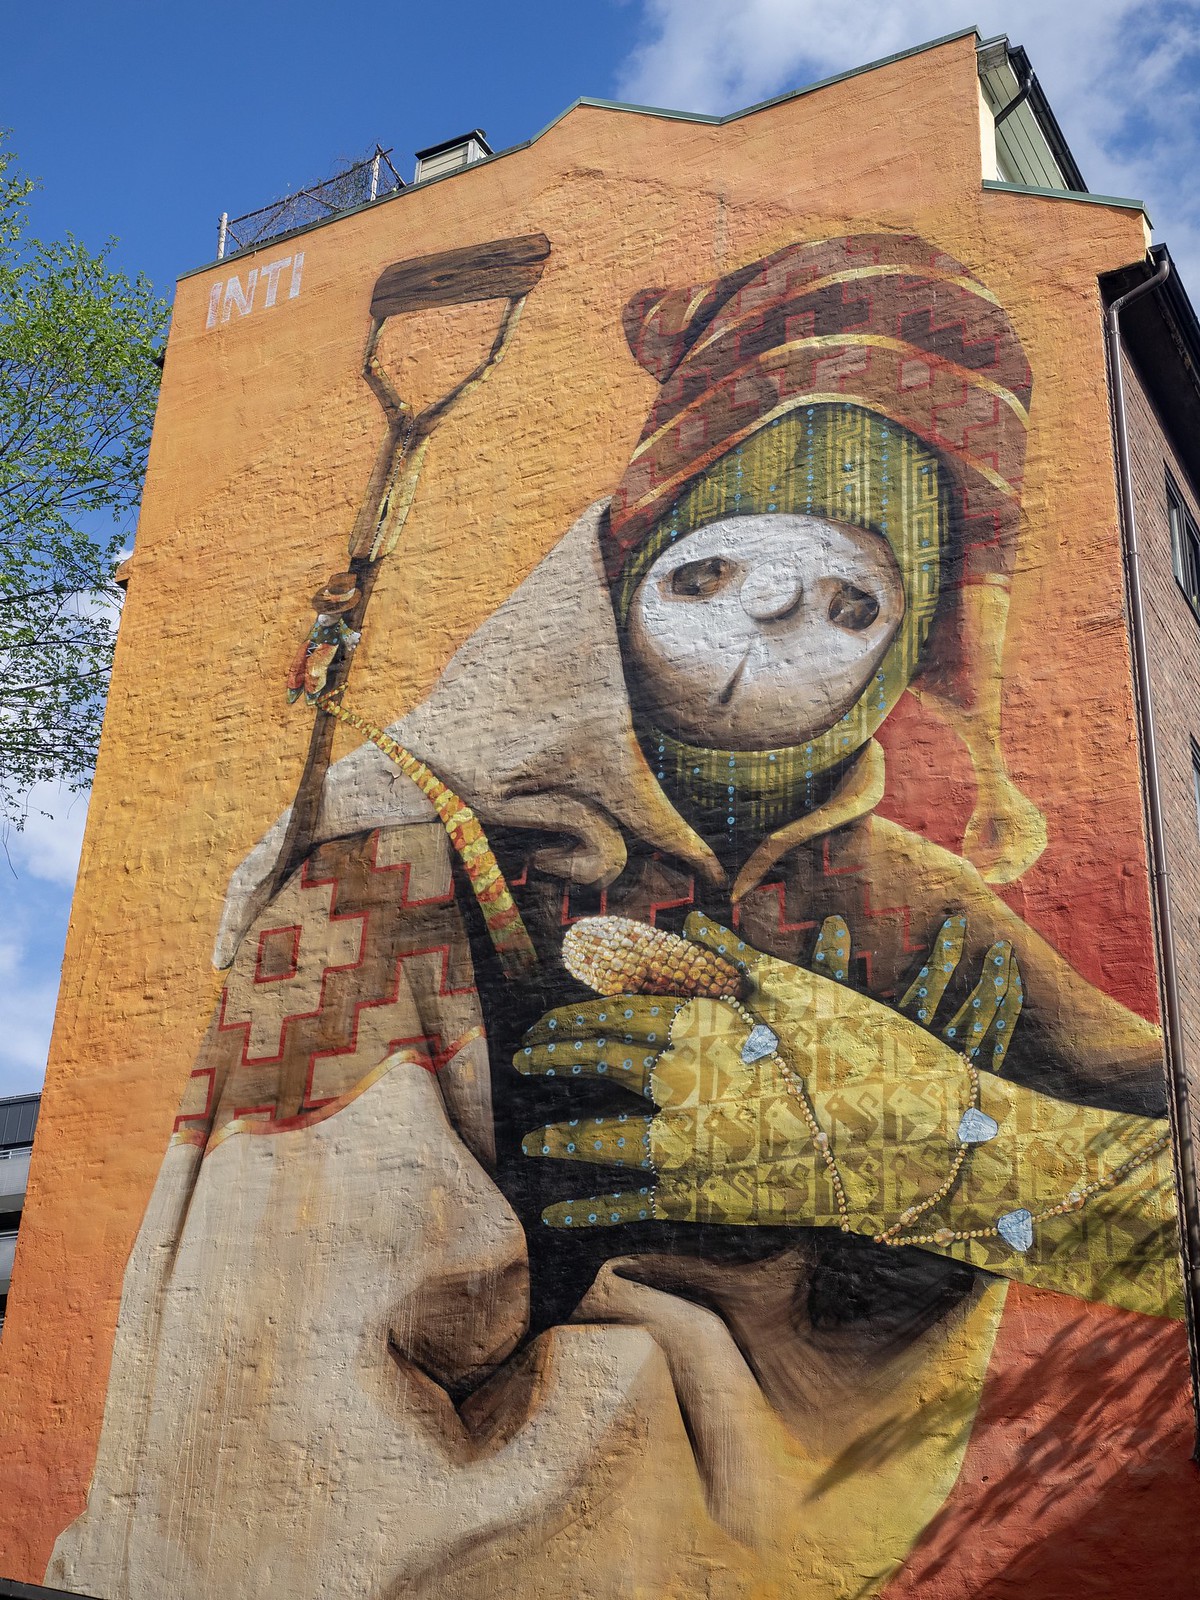 Oslo street art